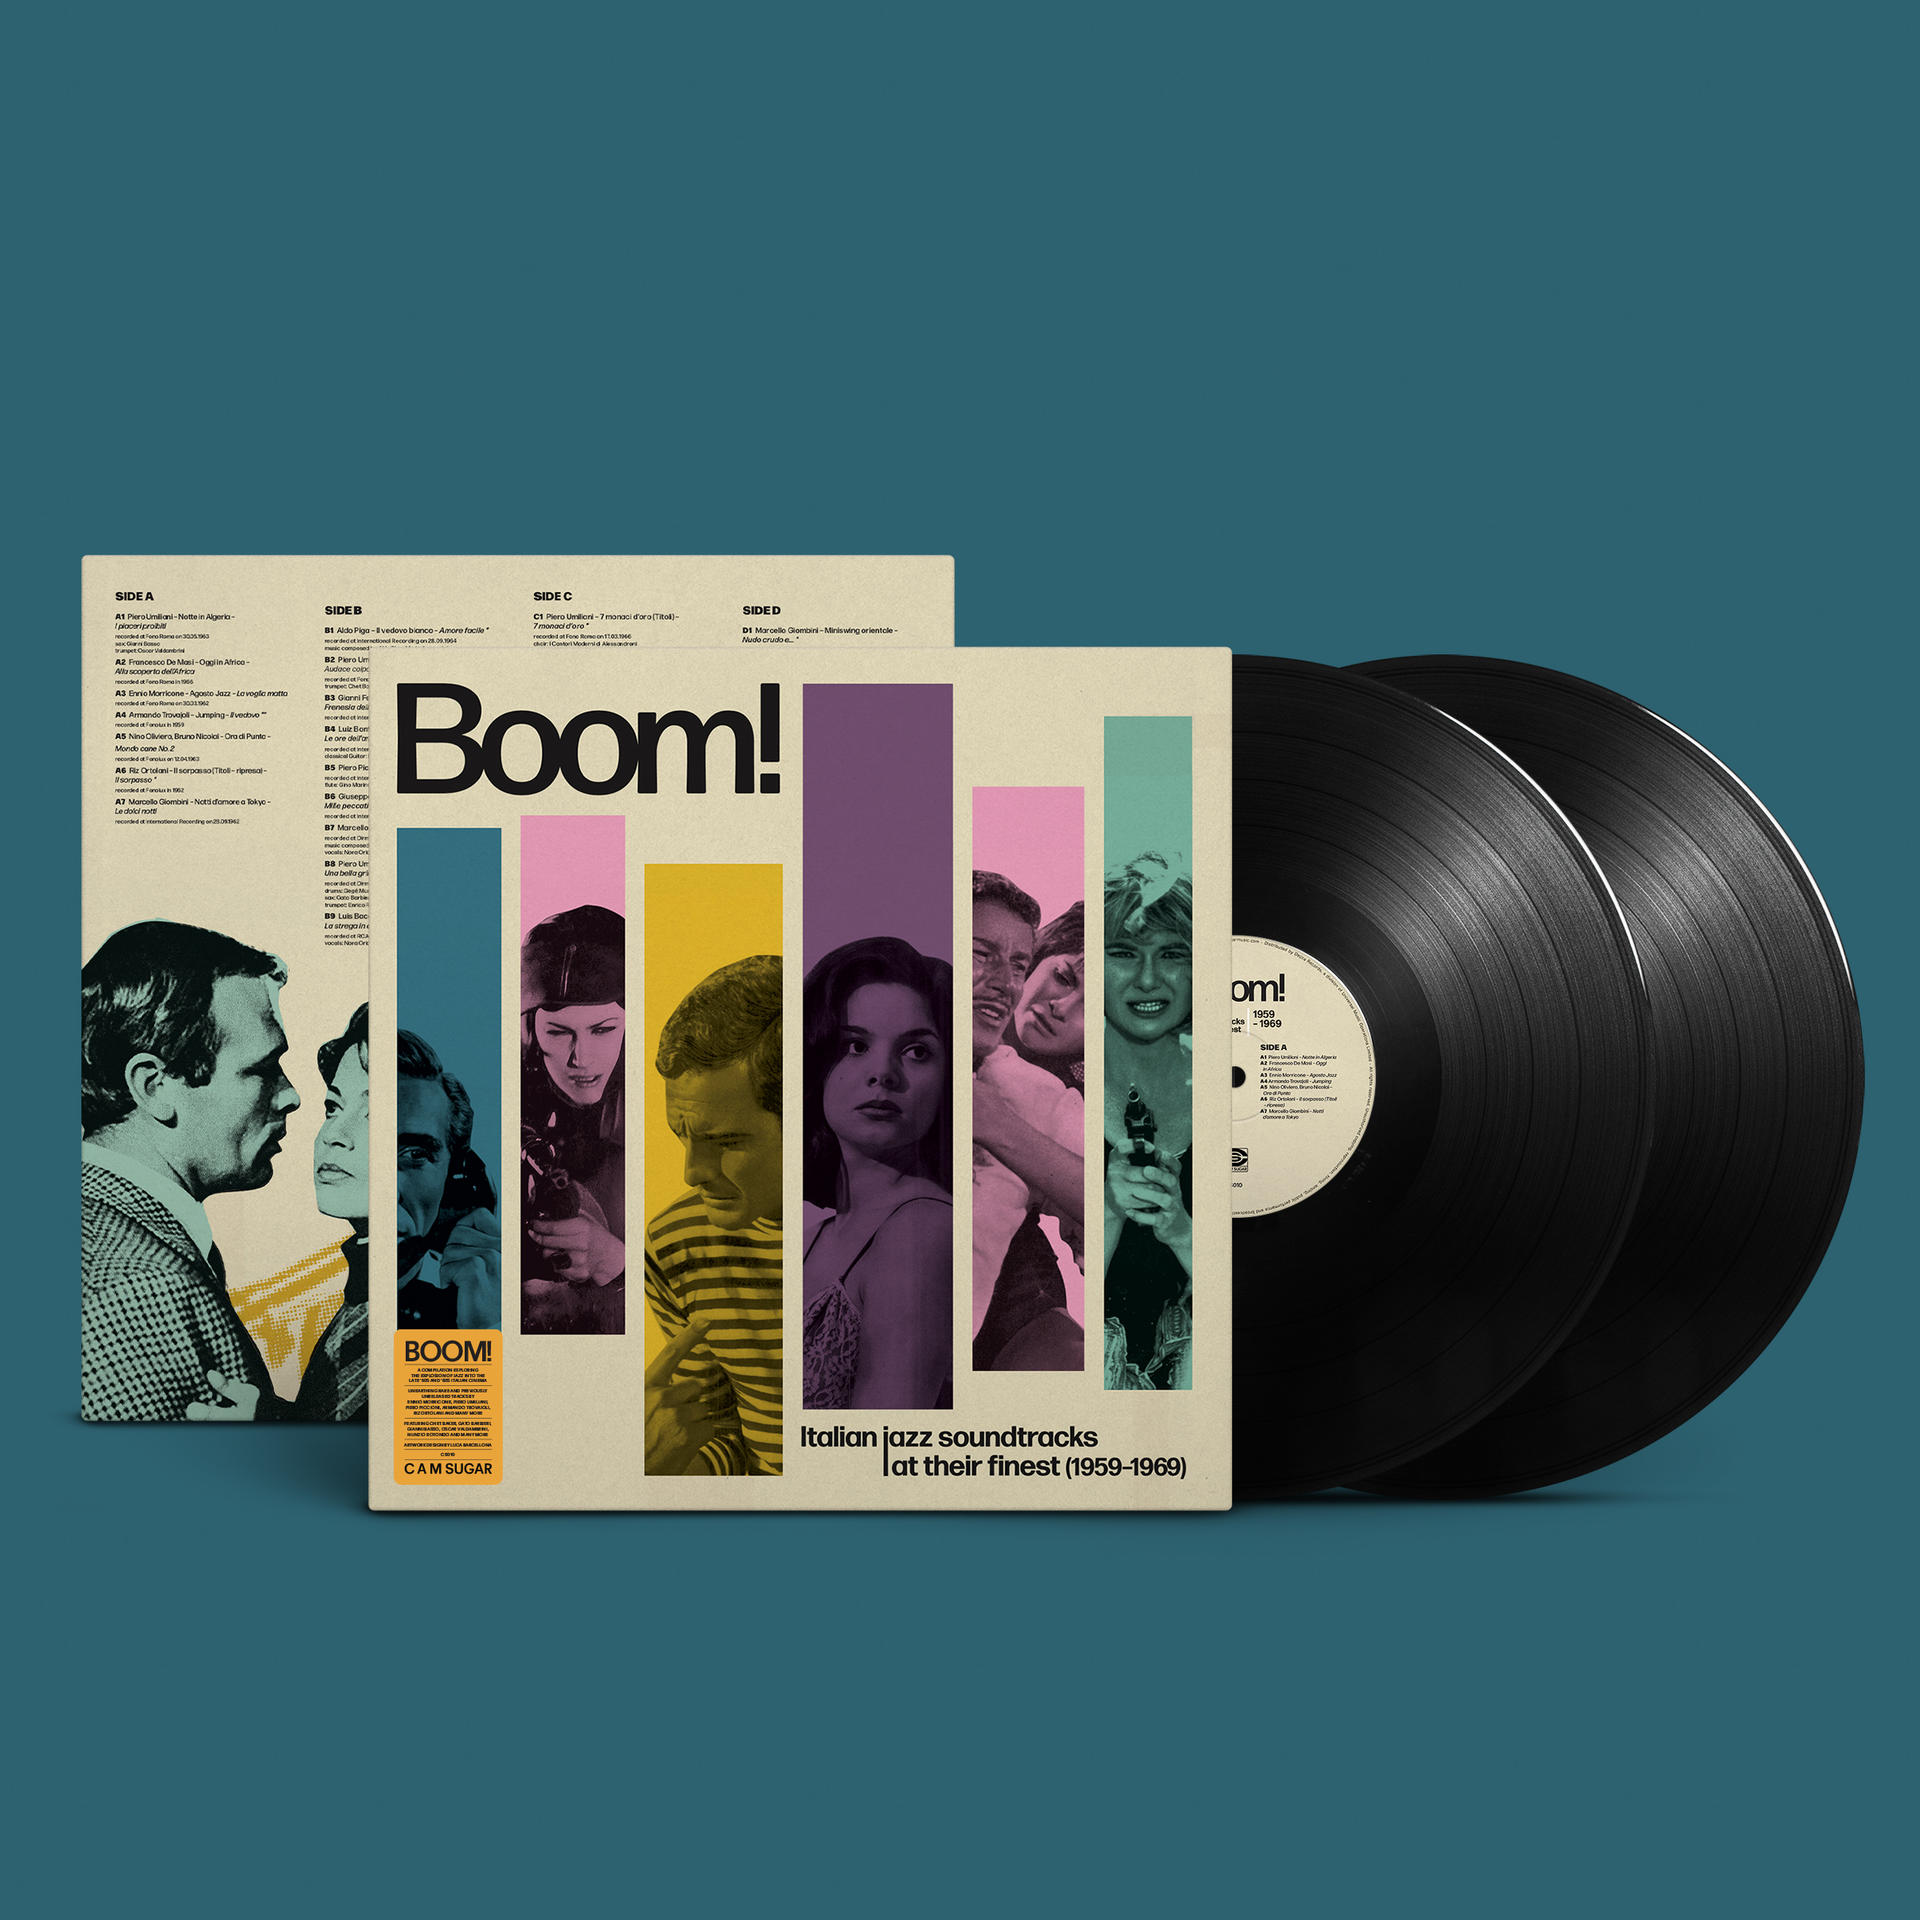 Jazz Italian At - Finest (Vinyl) Soundtracks - Their Boom! VARIOUS